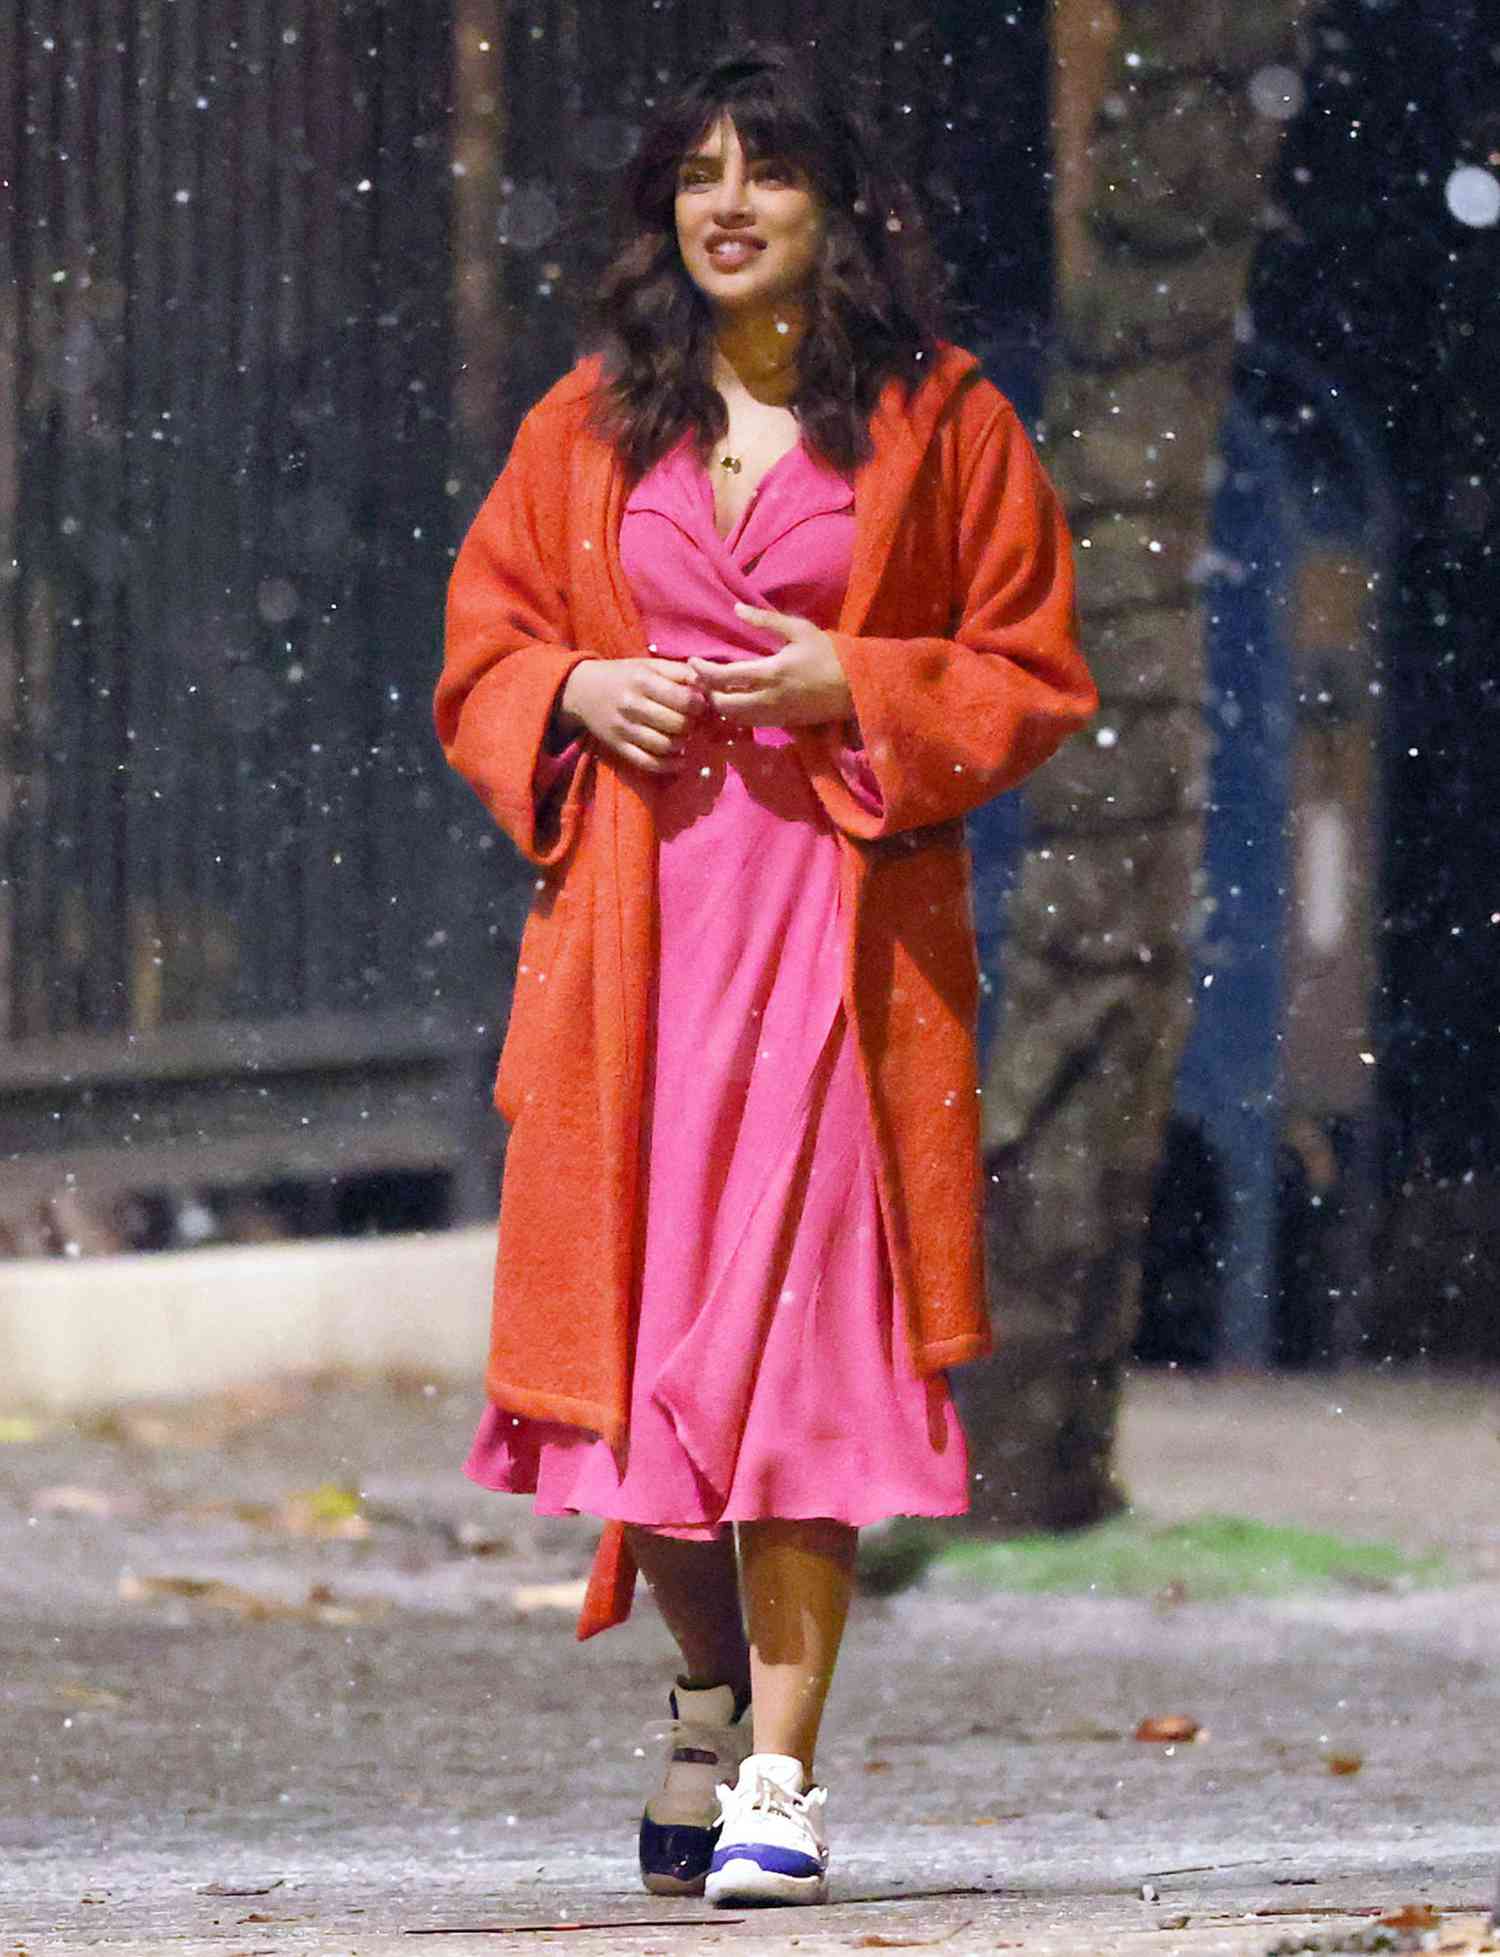 Priyanka Chopra Jonas And Sam Heughan Kiss Filming Romantic Snowy Scene For New Movie 'Text For You'